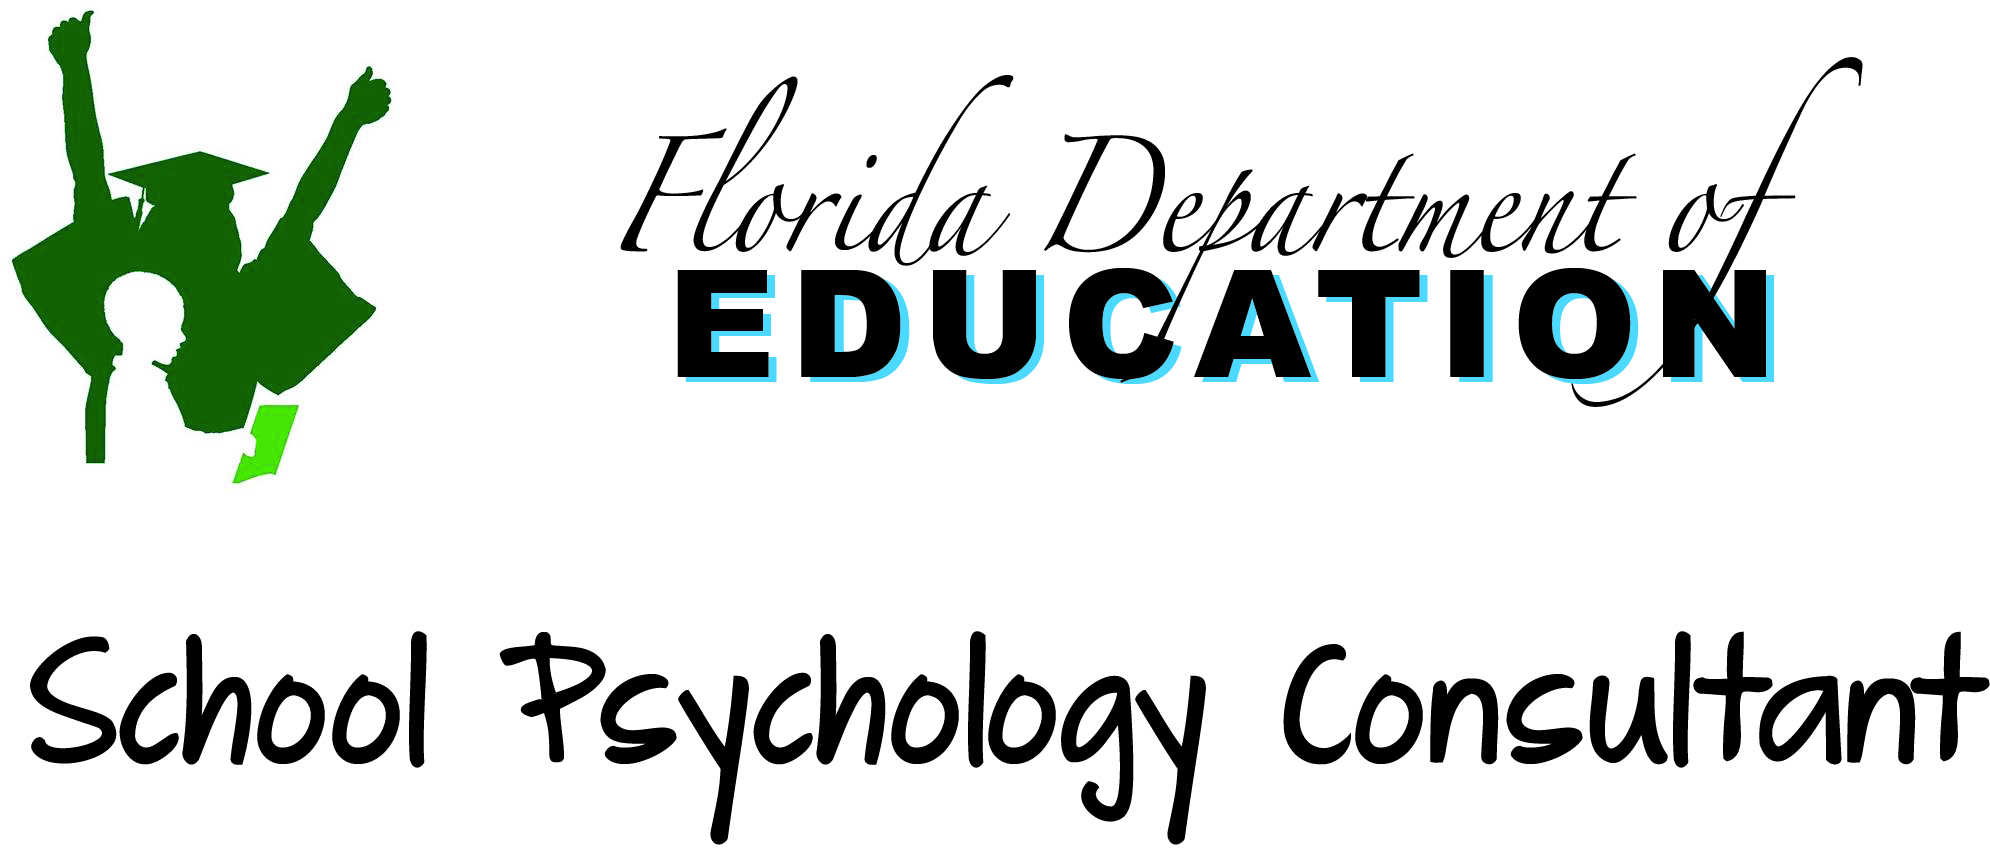 FLDOE School Psychology Consultant